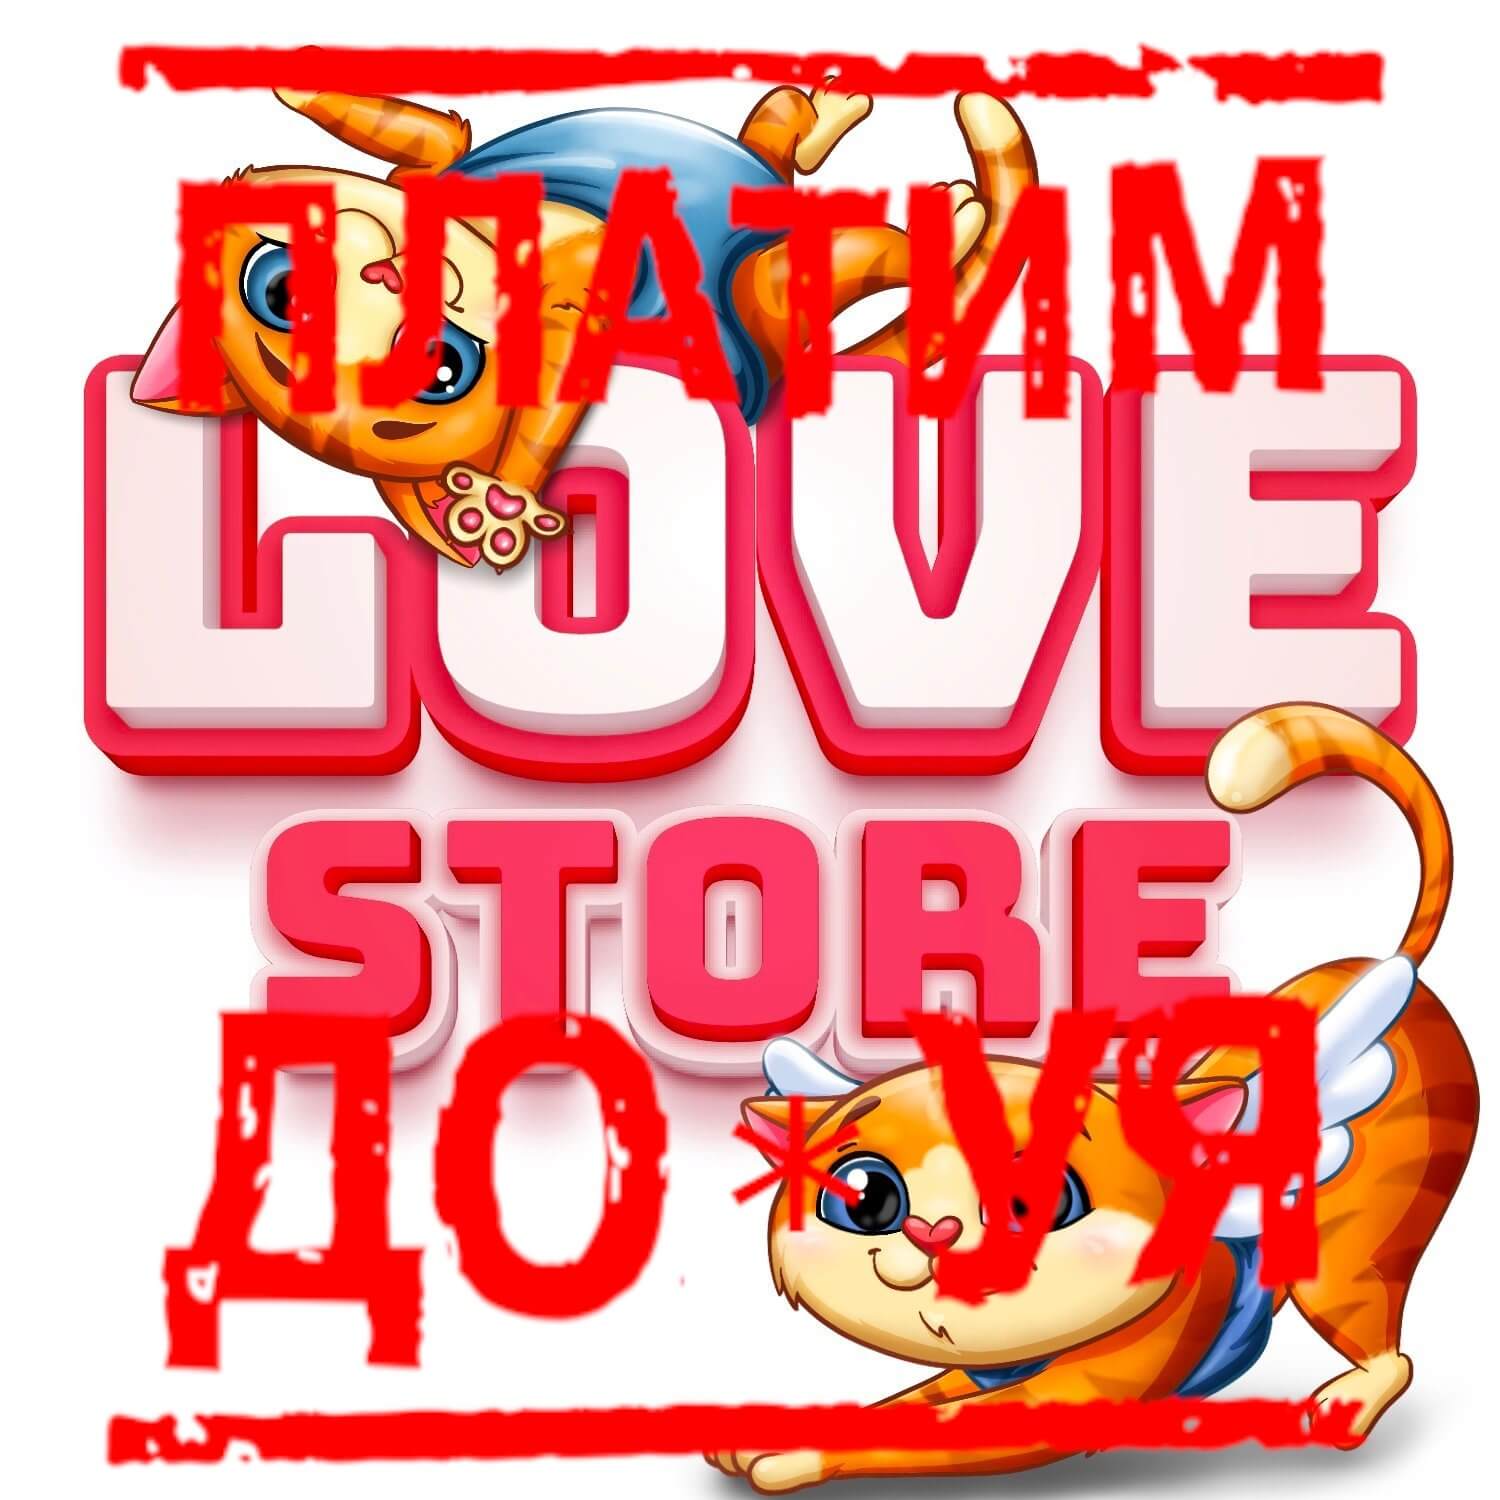 Love Store